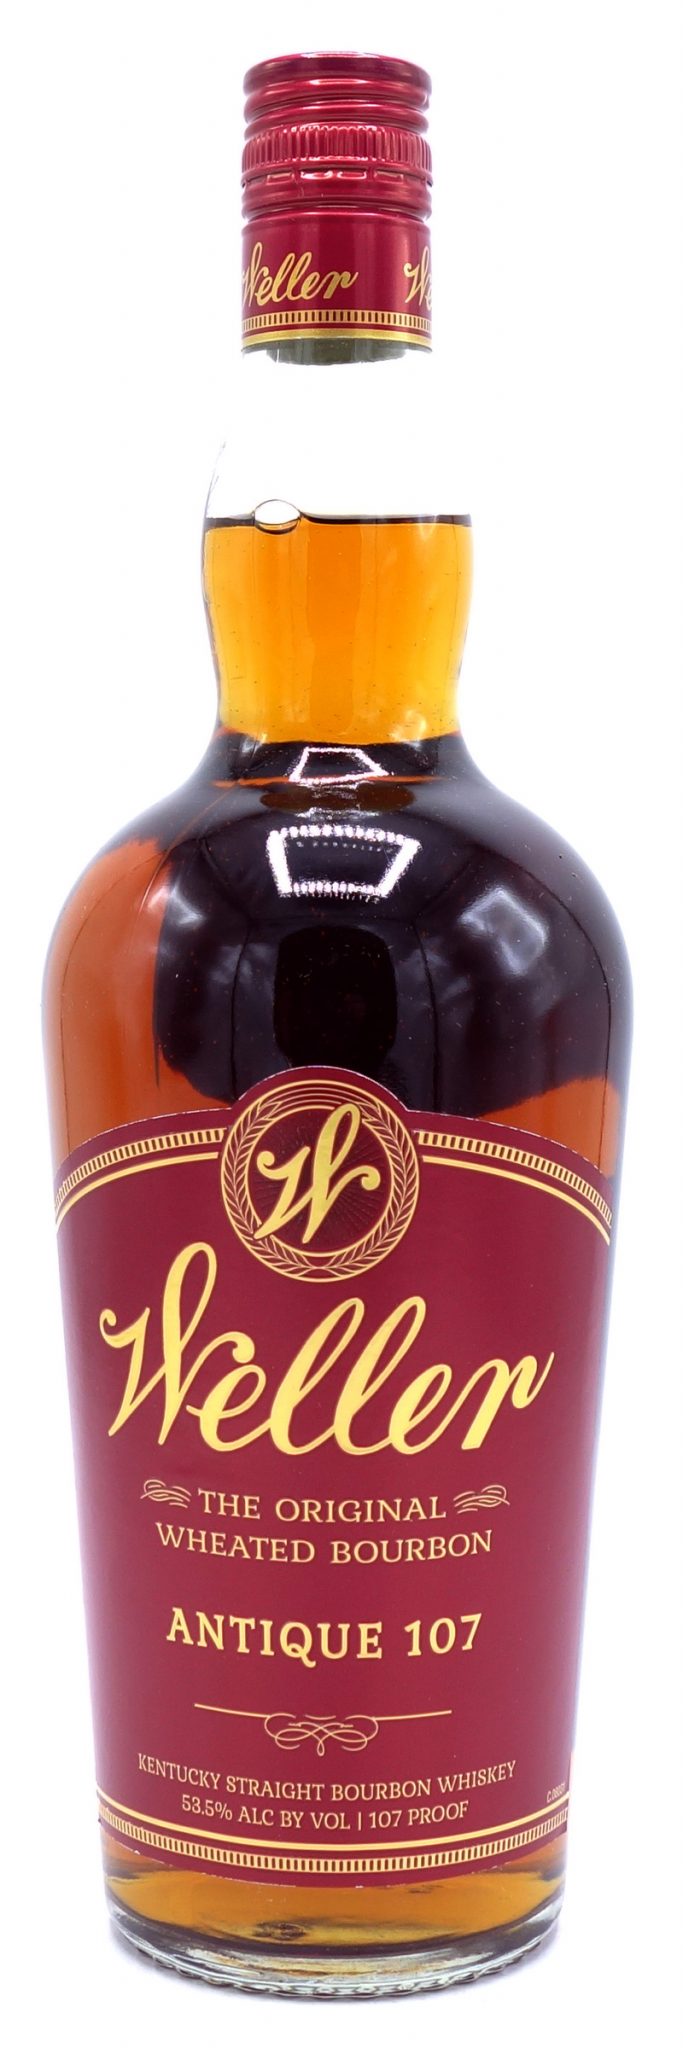 2018 Weller Kentucky Straight Bourbon Whiskey Antique 107 750ml